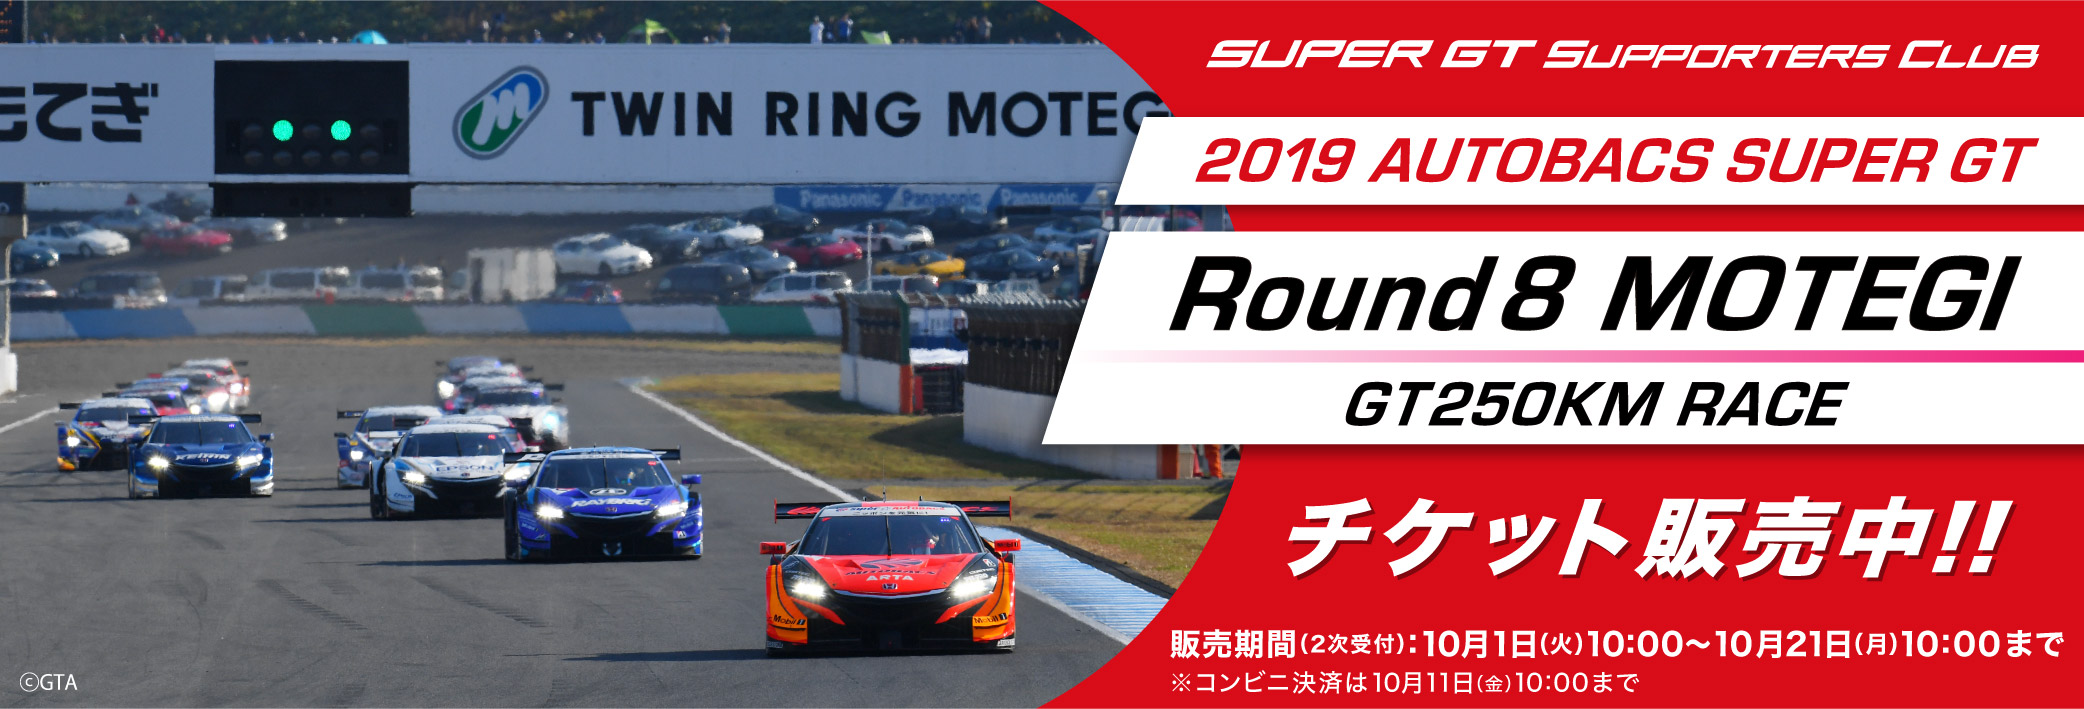 2019 AUTOBACS SUPER GT Rd.8 MOTEGI GT 250KM RACE 二次受付 チケット販売のご案内